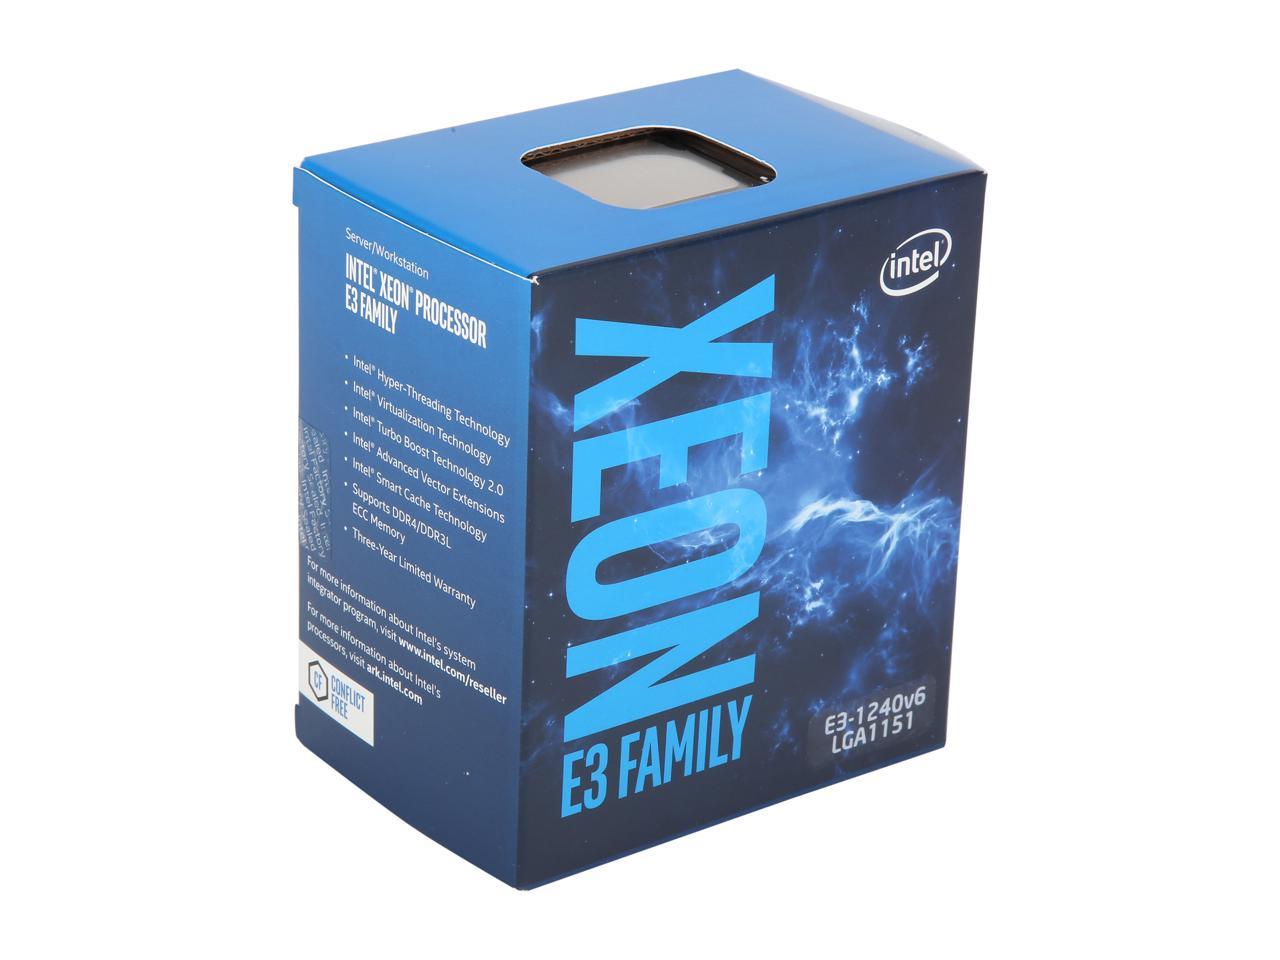 Intel Xeon E3 1240 V6 Kaby Lake 3 7 Ghz 4 1 Ghz Turbo Lga 1151 72w